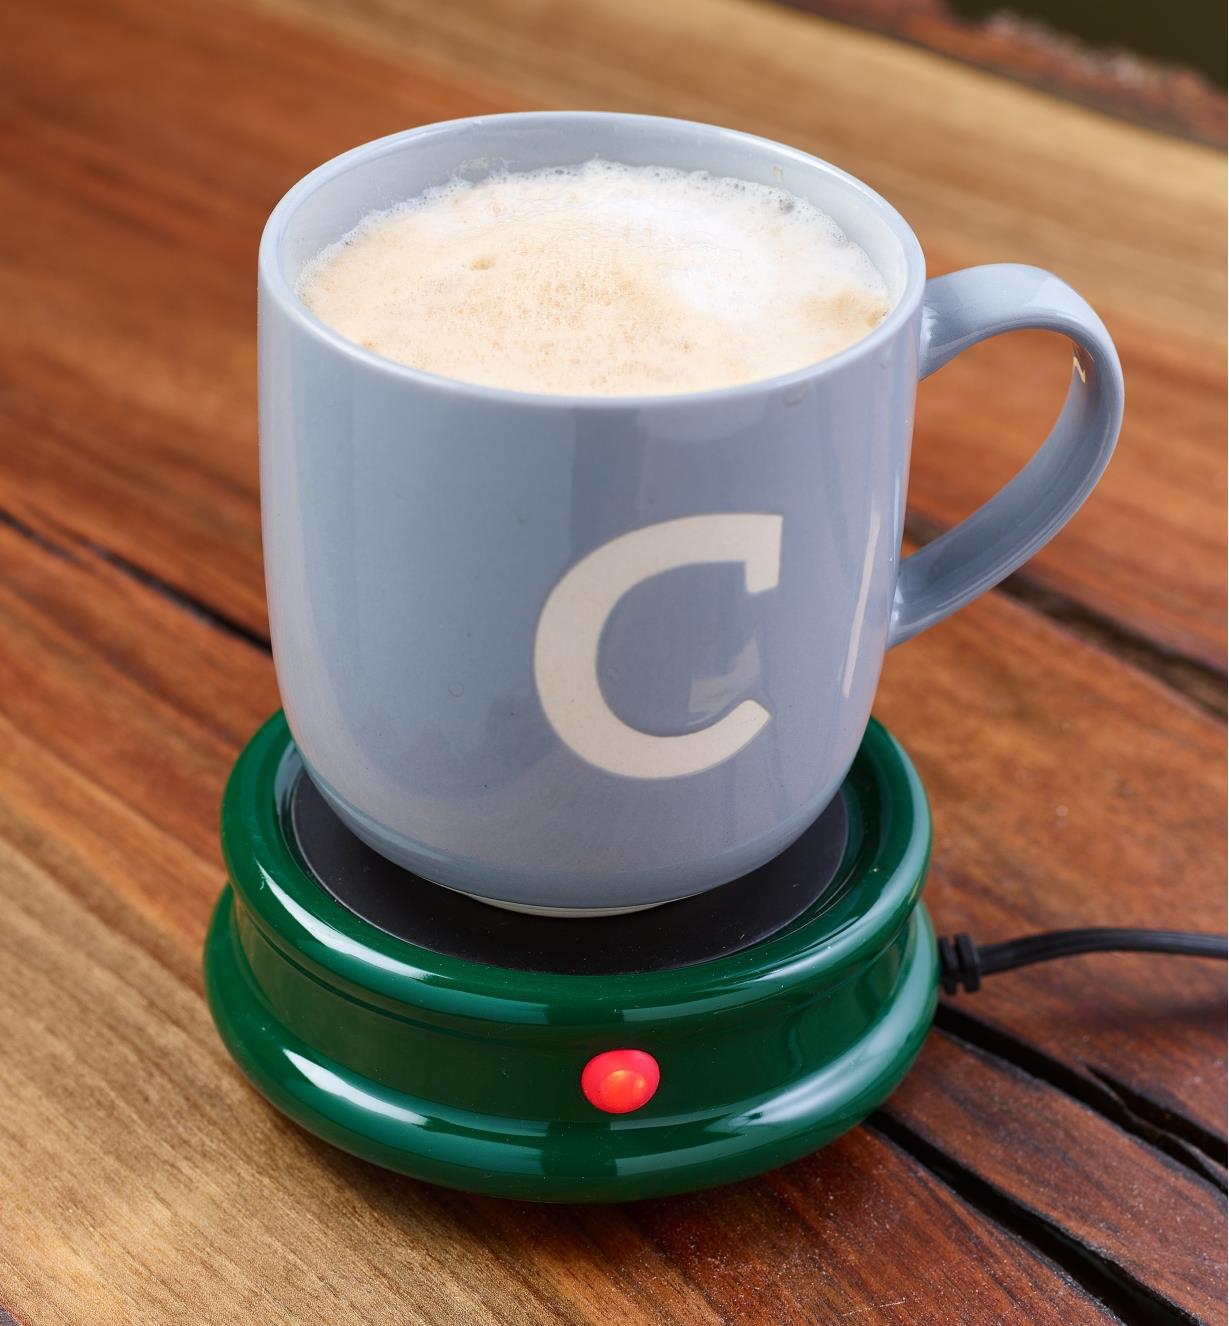 A full mug on a tabletop warmer